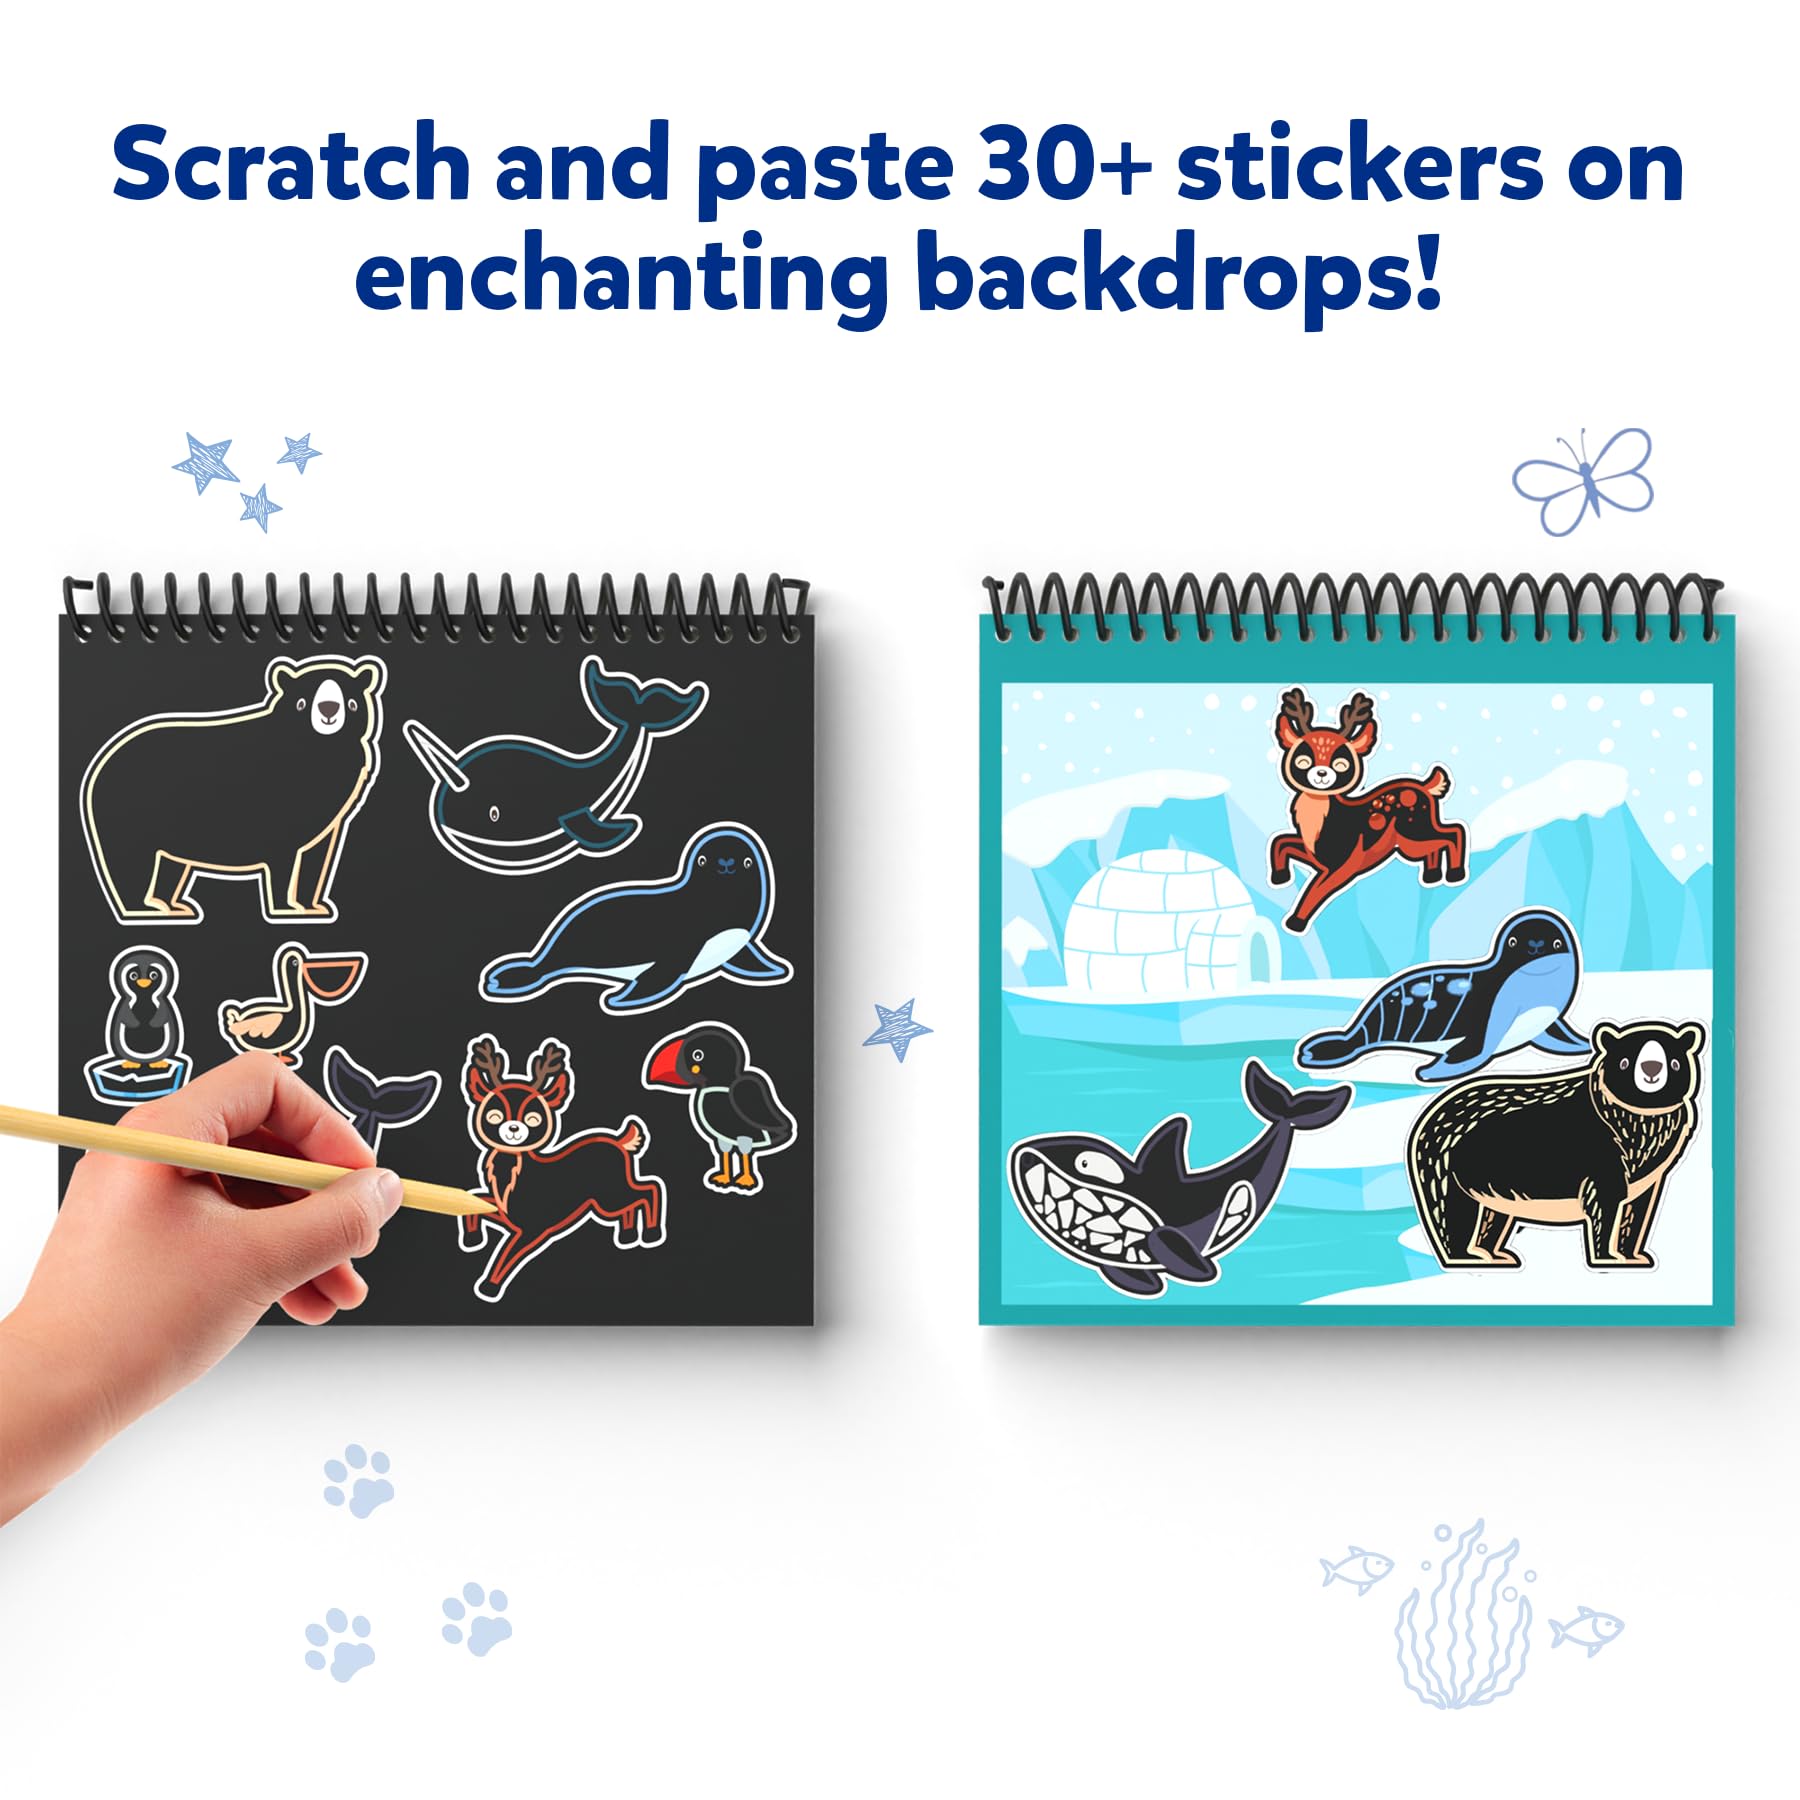 Skillmatics Foil Fun & Magical Scratch Art Book with Animals Theme Bundle, Art & Craft Kits, DIY Activities for Kids